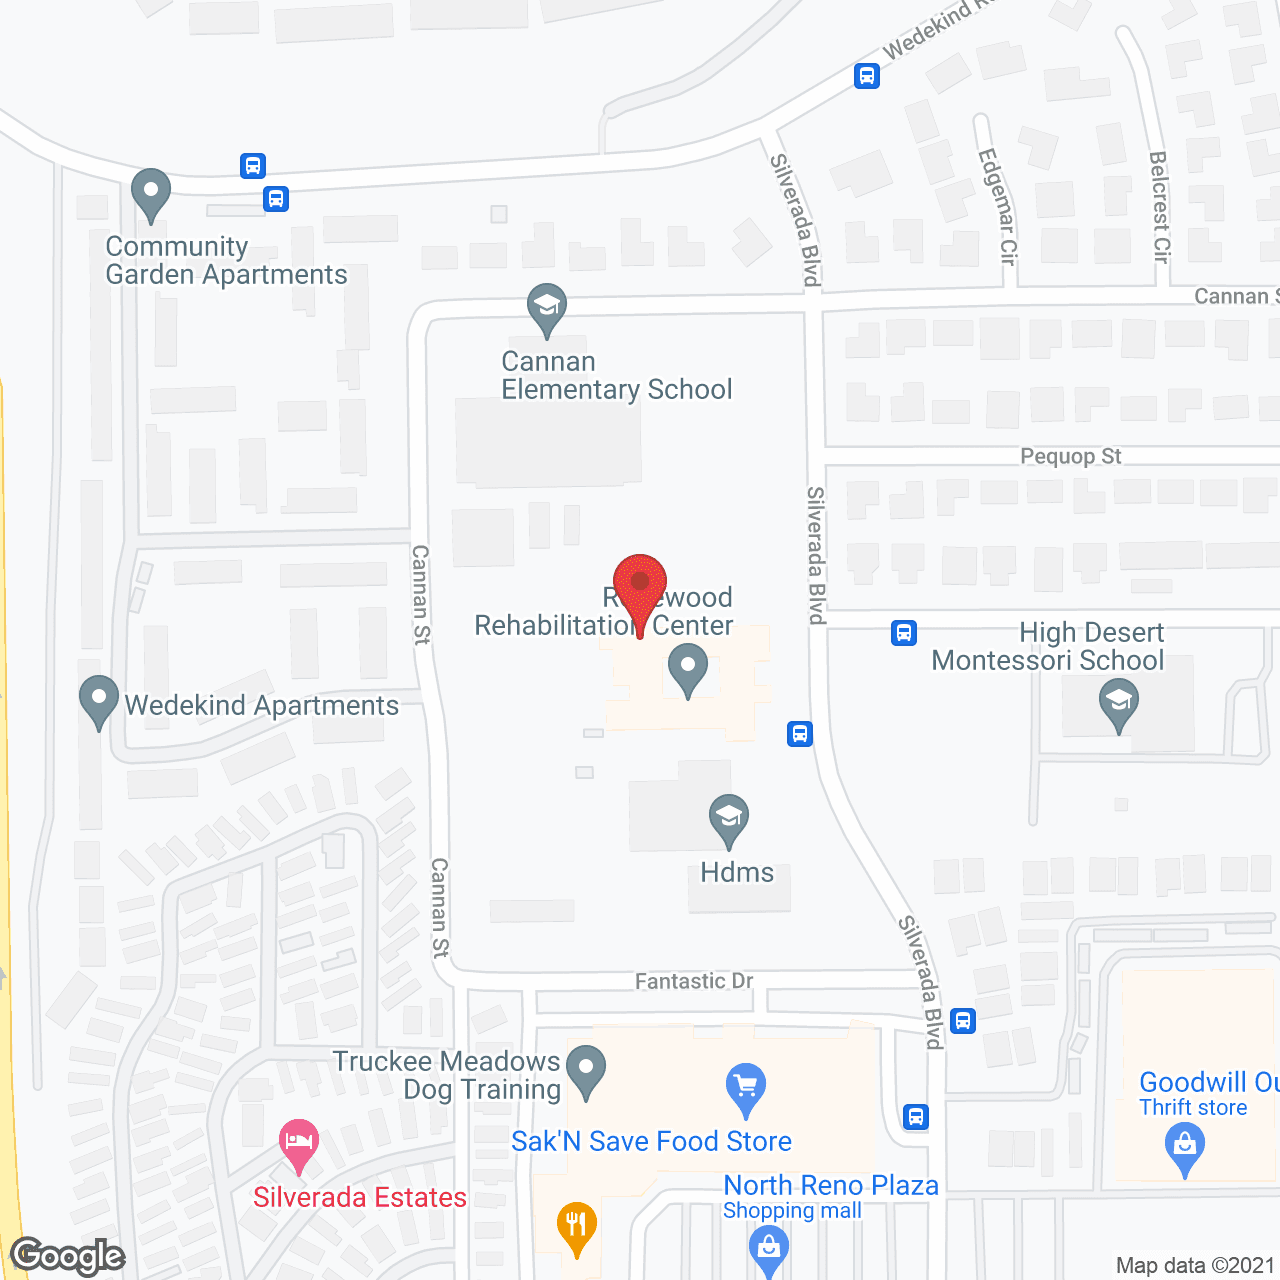 Rosewood Rehabilitation Center in google map